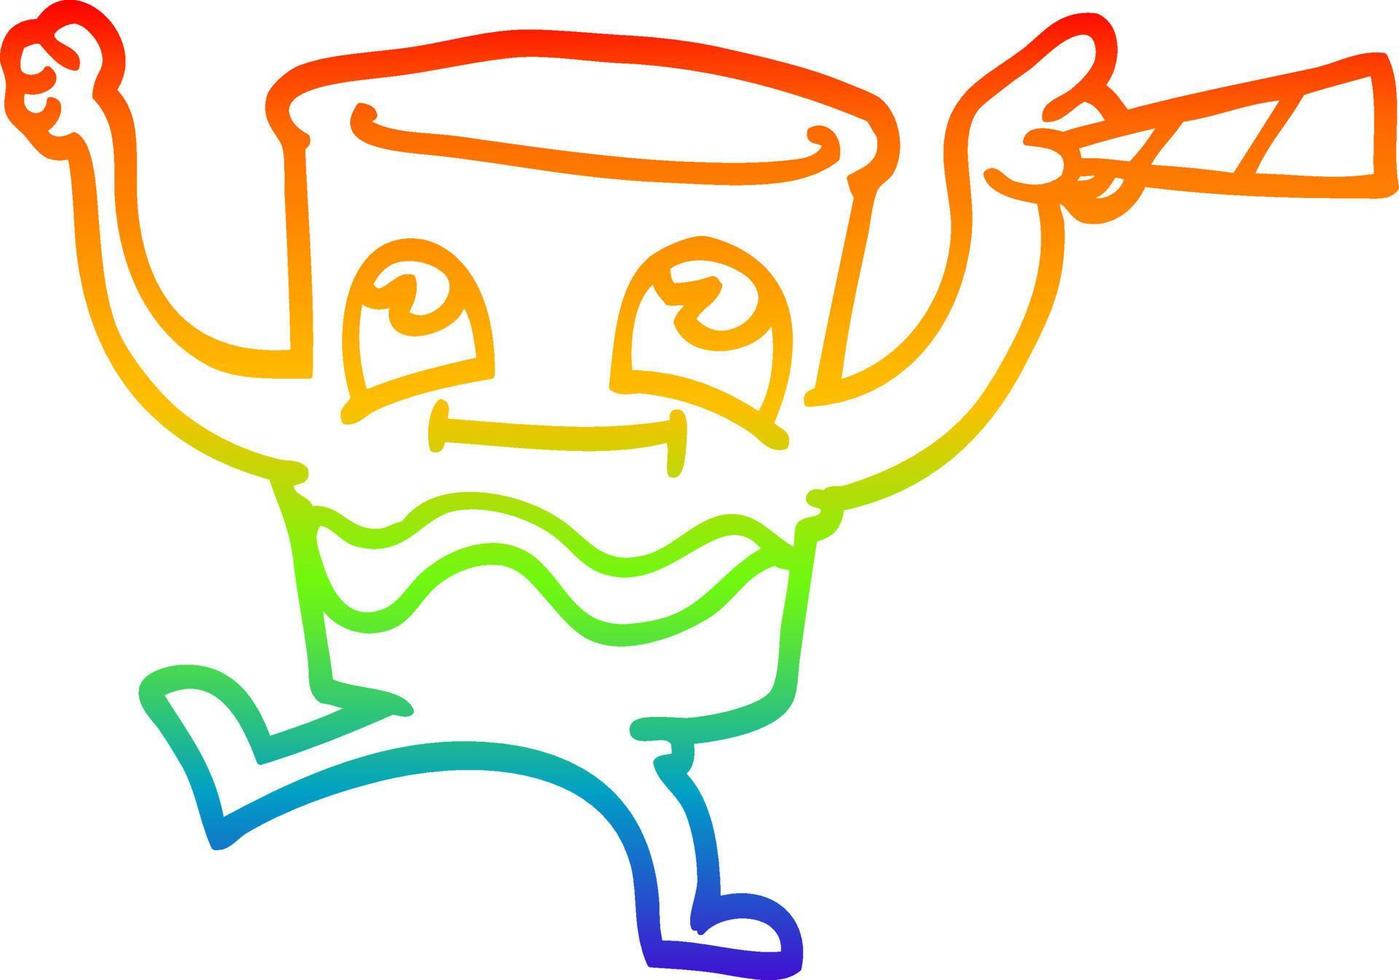 rainbow gradient line drawing cartoon whisky glass vector